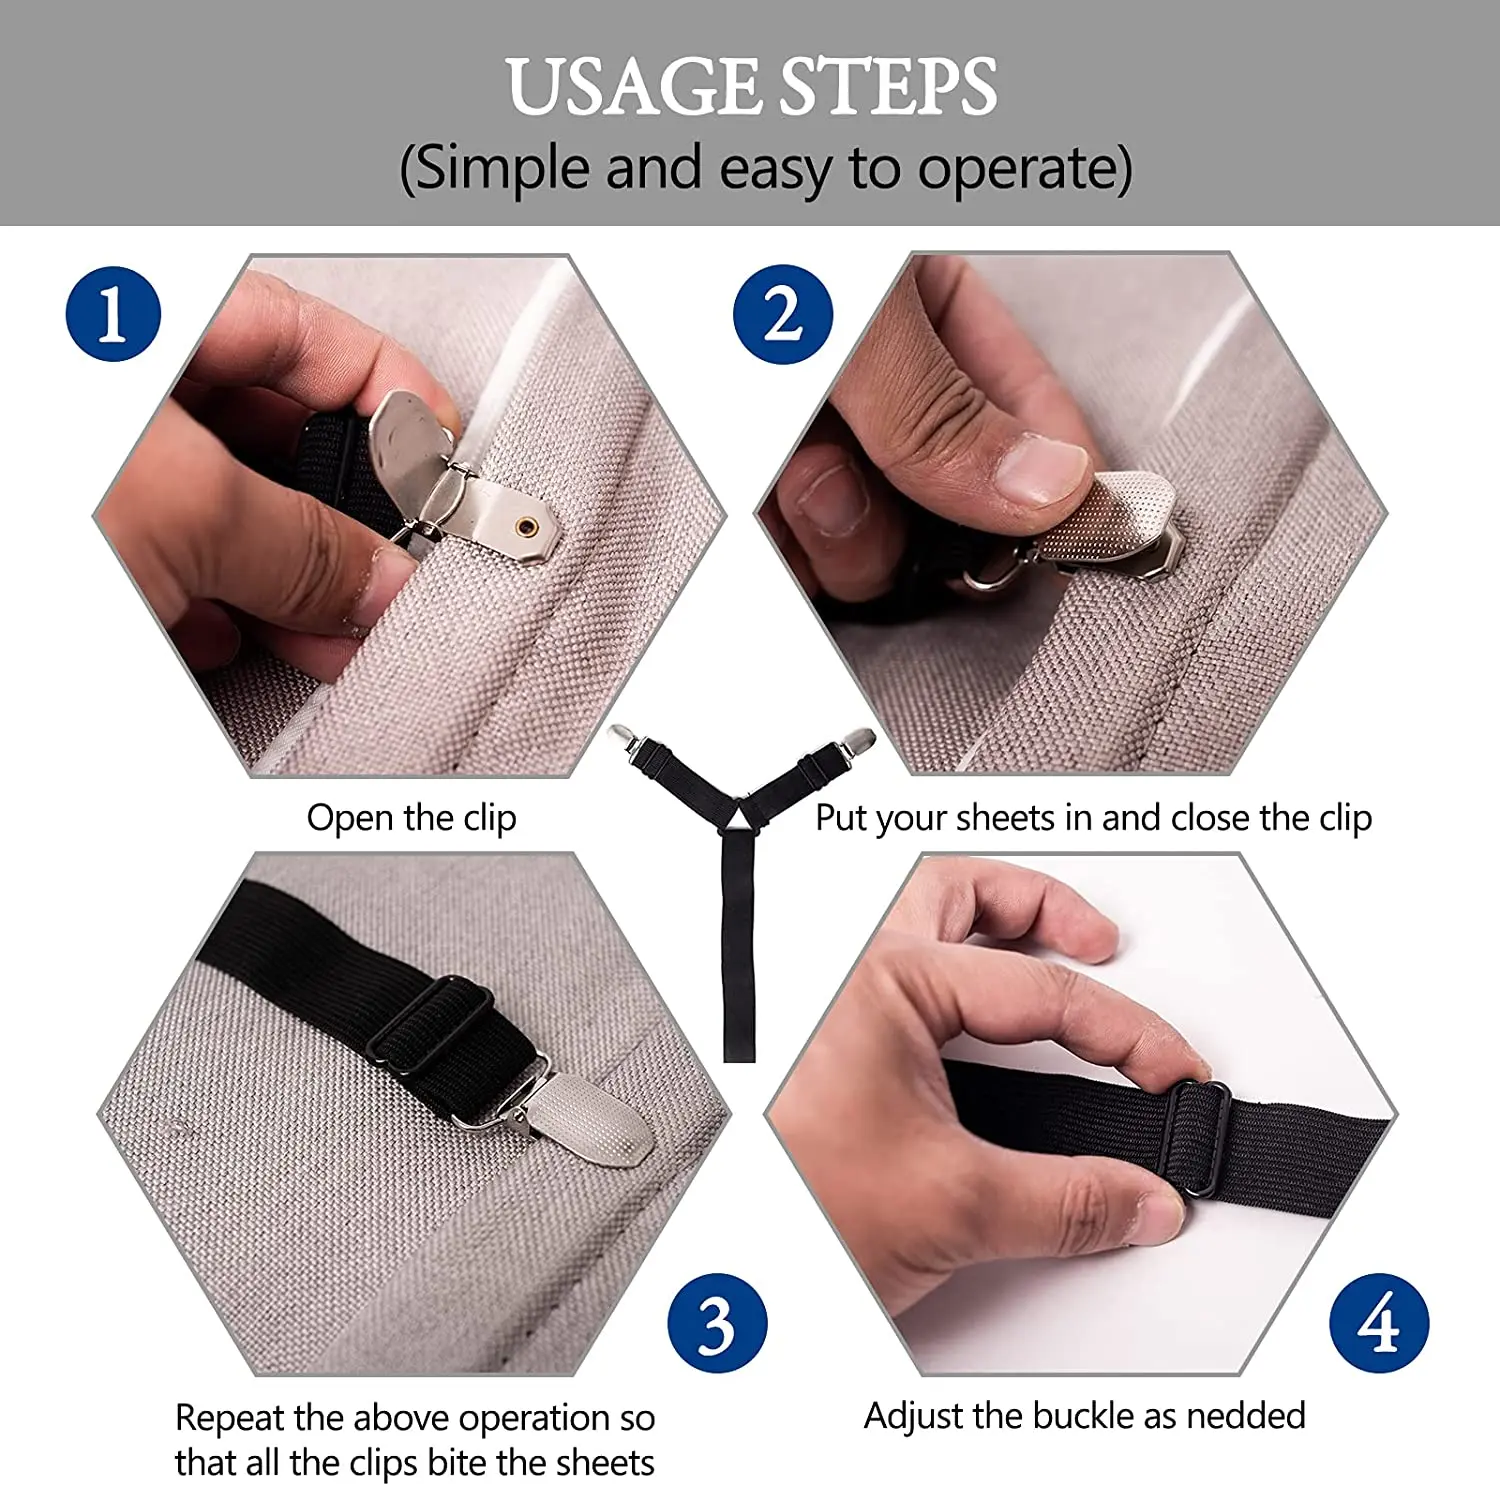 Bed Sheet Holder Straps - Adjustable Crisscross Sheet Clips Elastic Band  Fitted Bed Sheet Fasten Suspenders Grippers,2Pcs/Set Black 